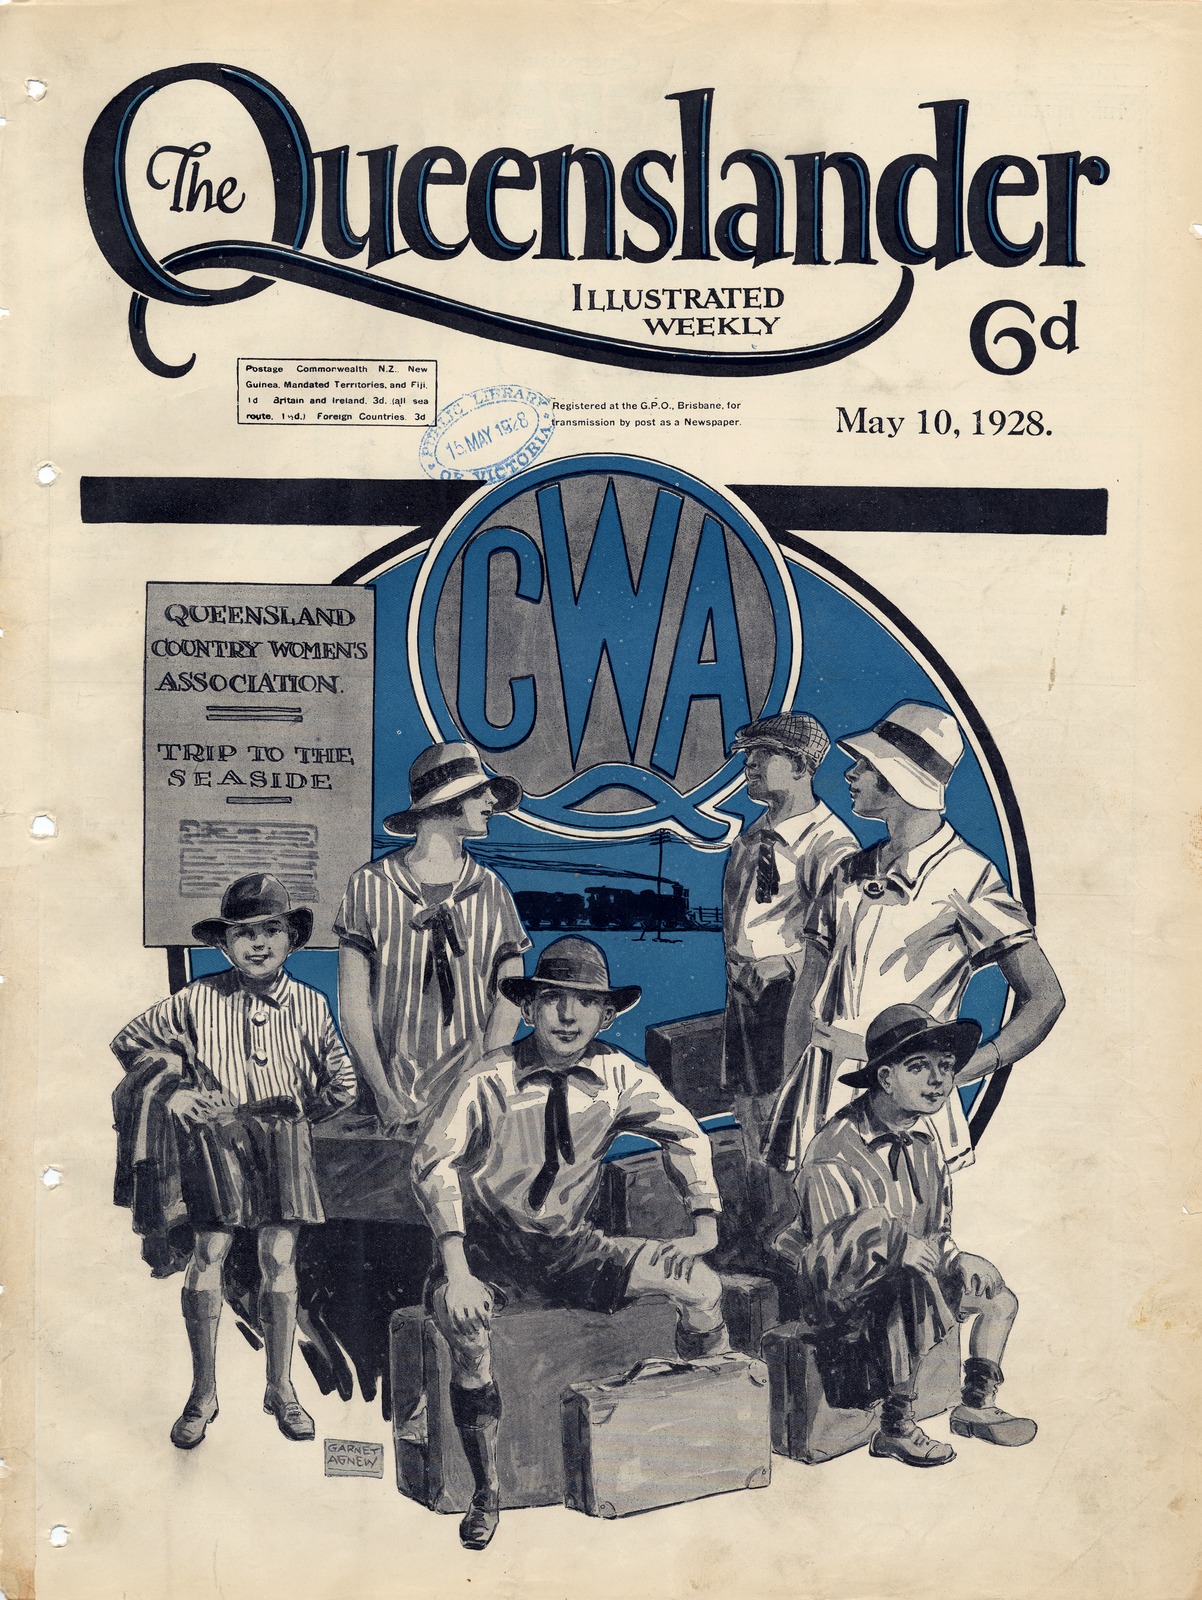 The Queenslander newspaper featuring he Country Women's Association 